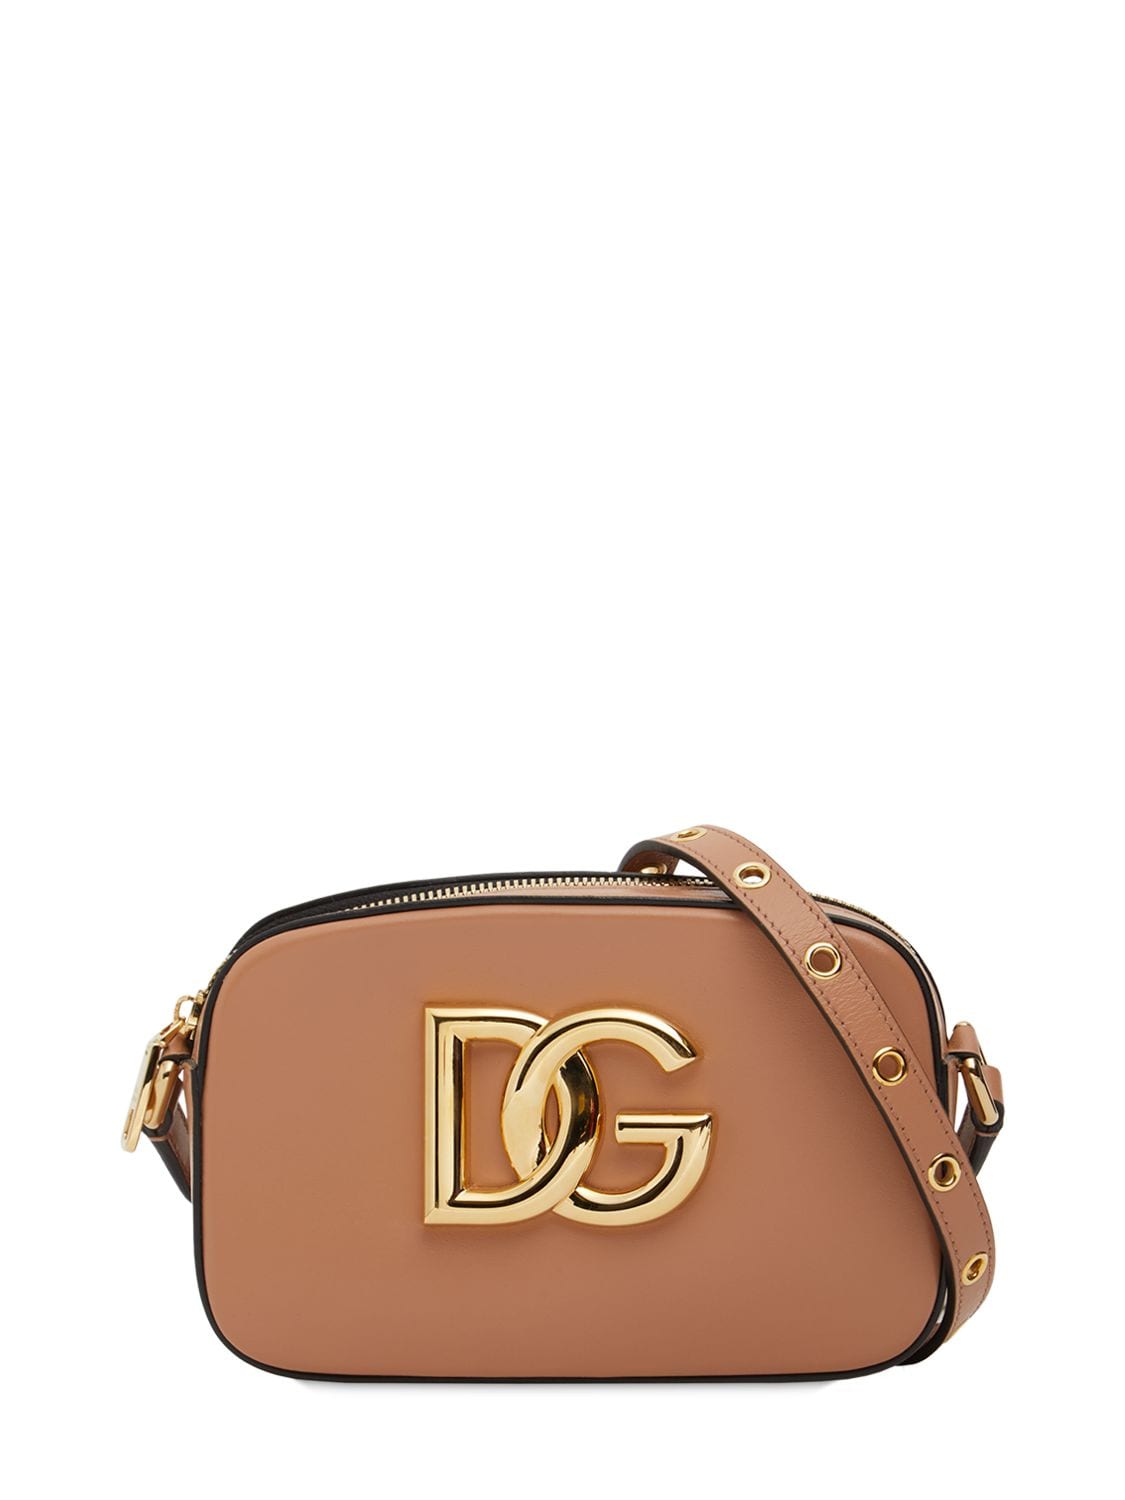 Dolce & Gabbana 3.5 Dg Leather Camera Bag In Antique Pink | ModeSens